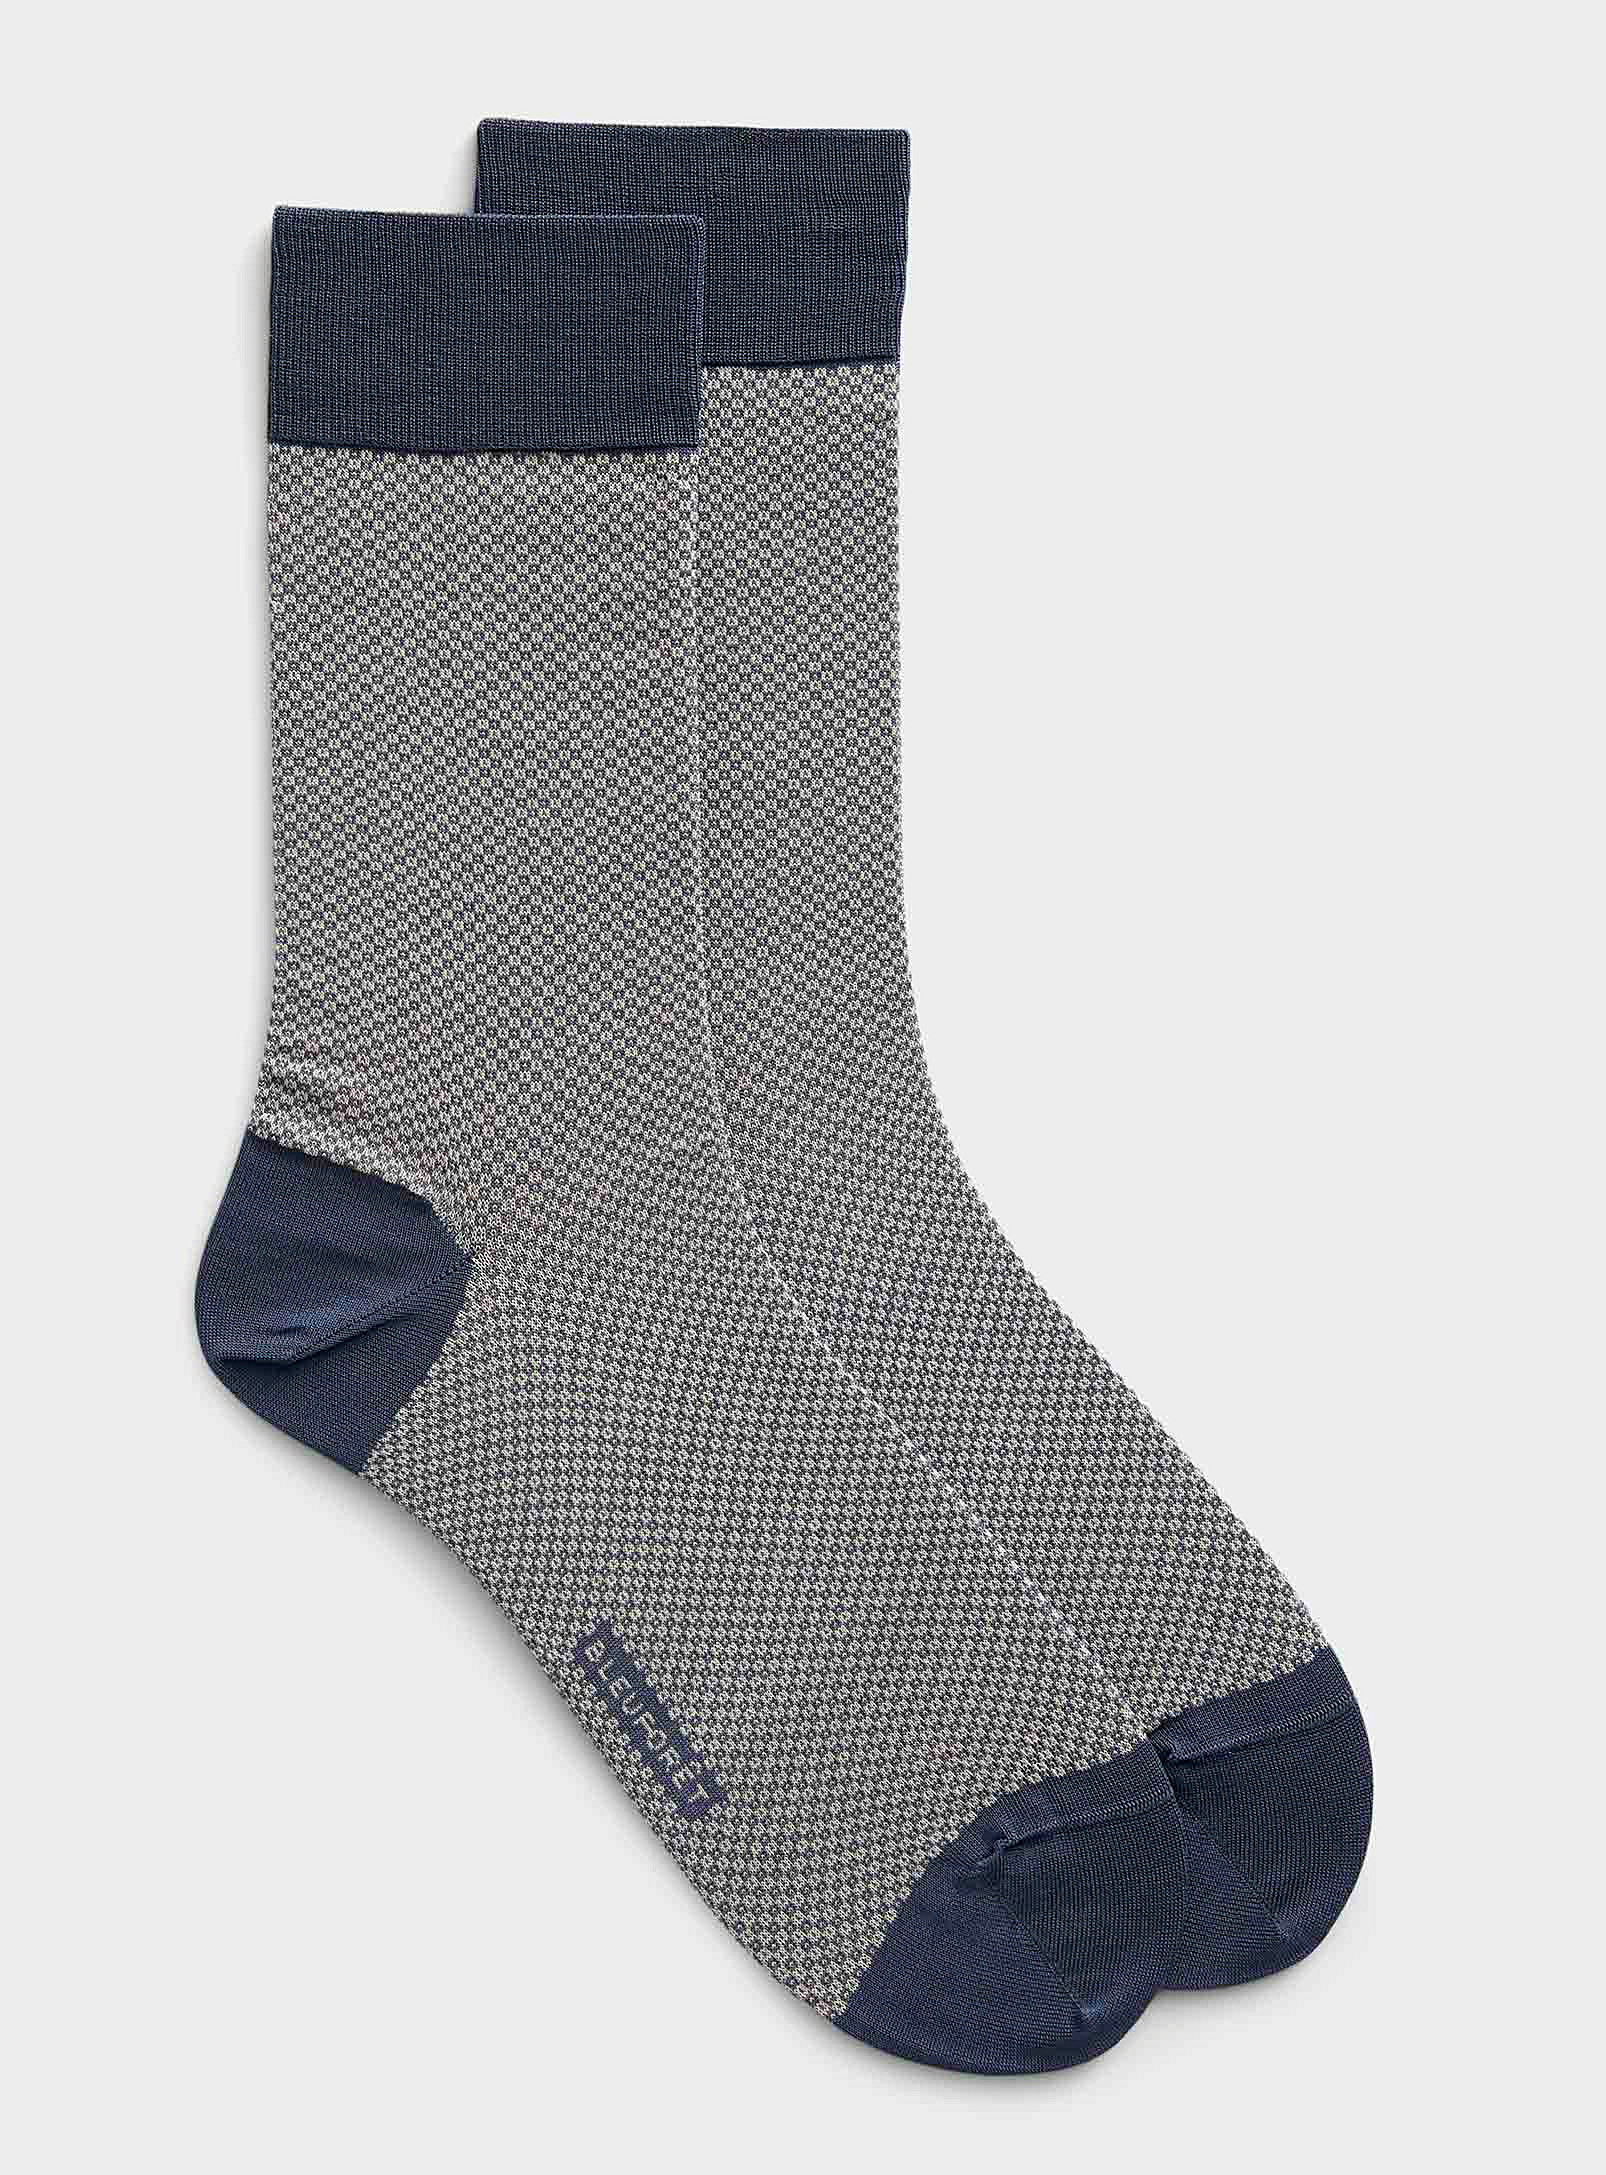 Bleuforêt Bird's Eye Knit Sock In Gray